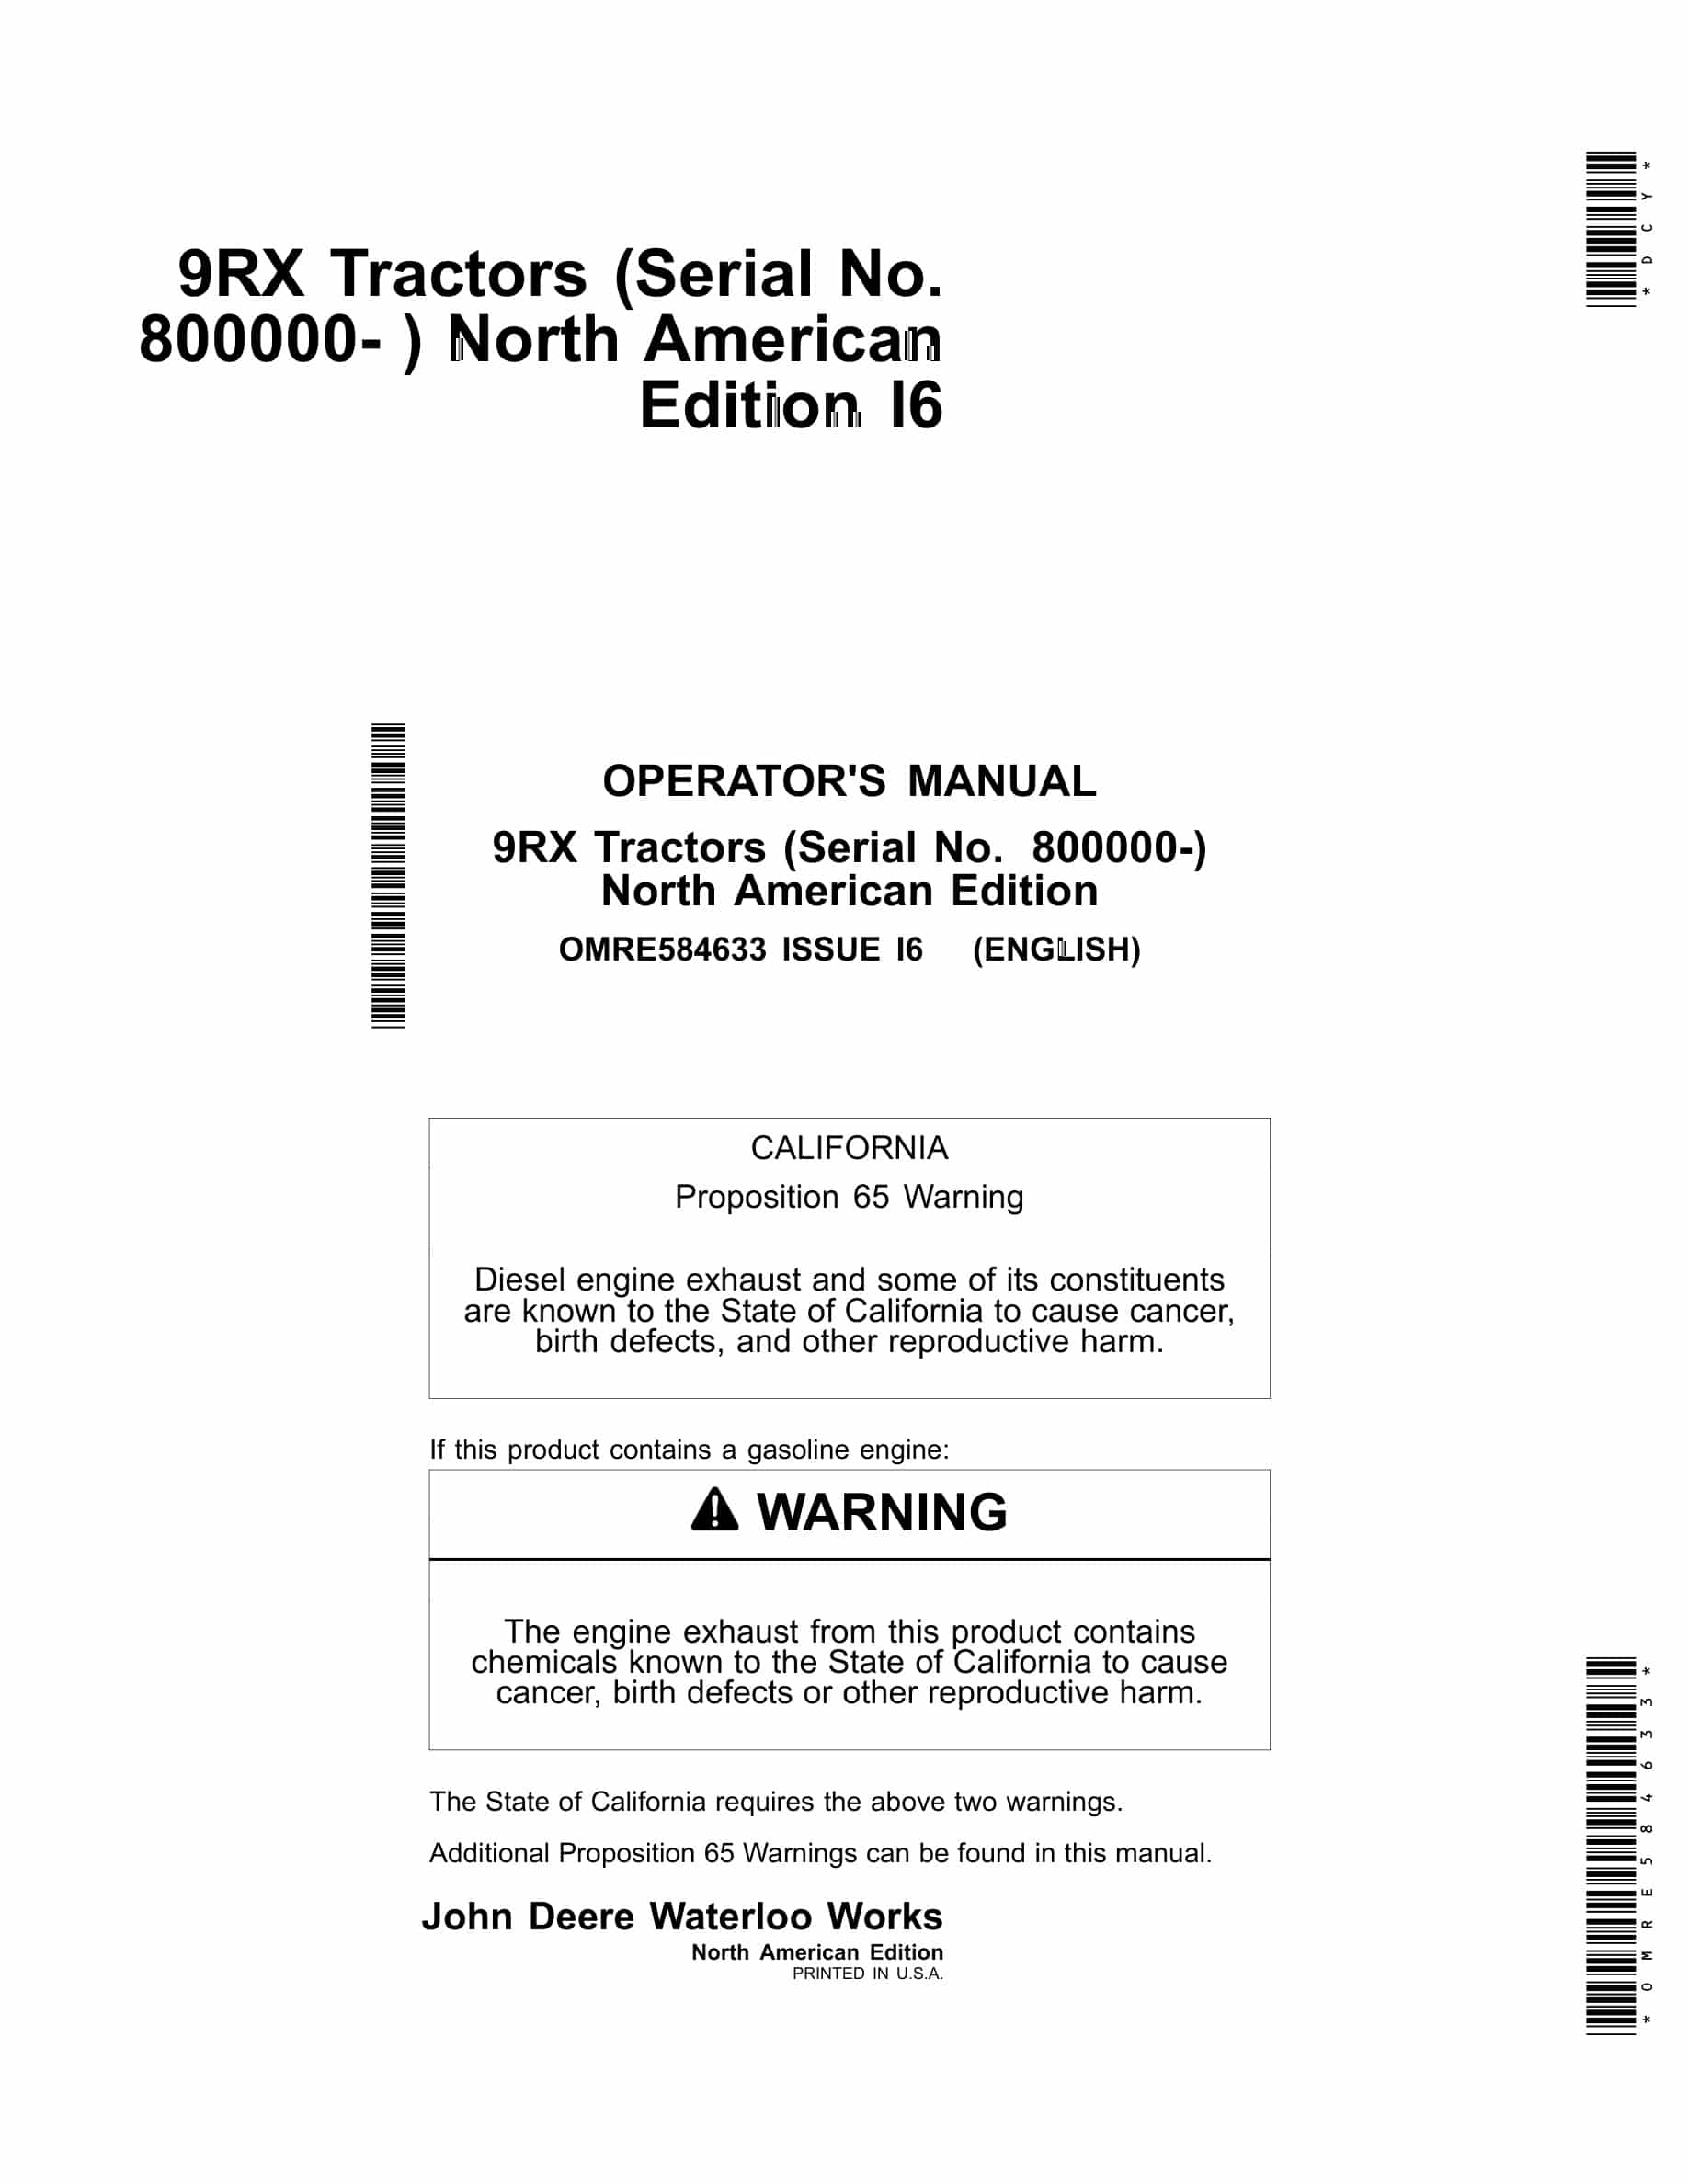 John Deere 9RX Tractor Operator Manual OMRE584633-1